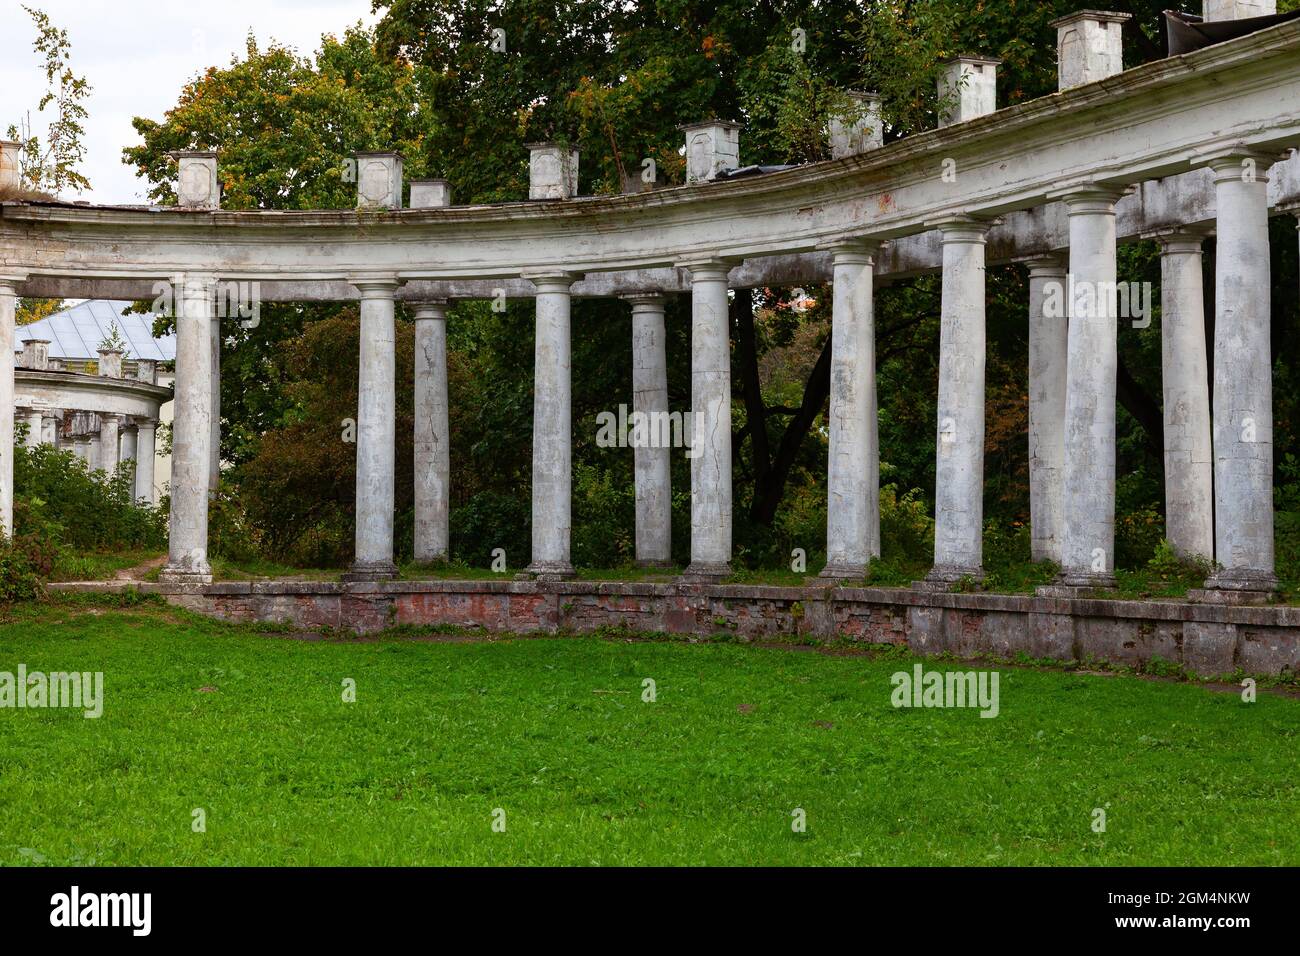 The dilapidated colonnade of the Pekhra-Yakovlevskoye estate of the Golitsyn princes in Balashikha, Russia. Stock Photo